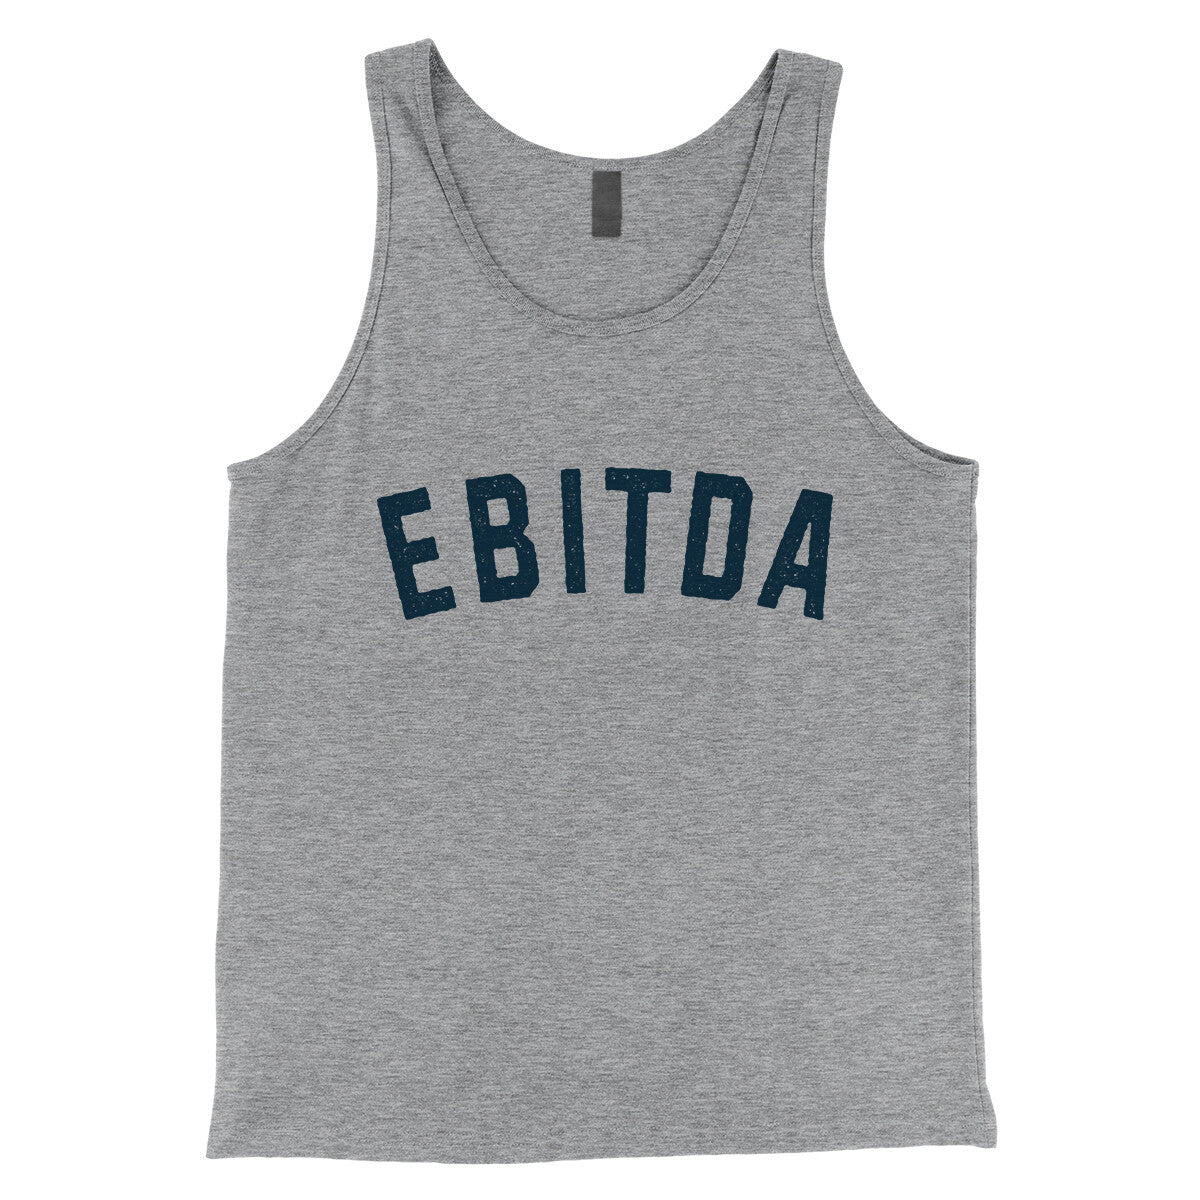 EBITDA in Athletic Heather Color